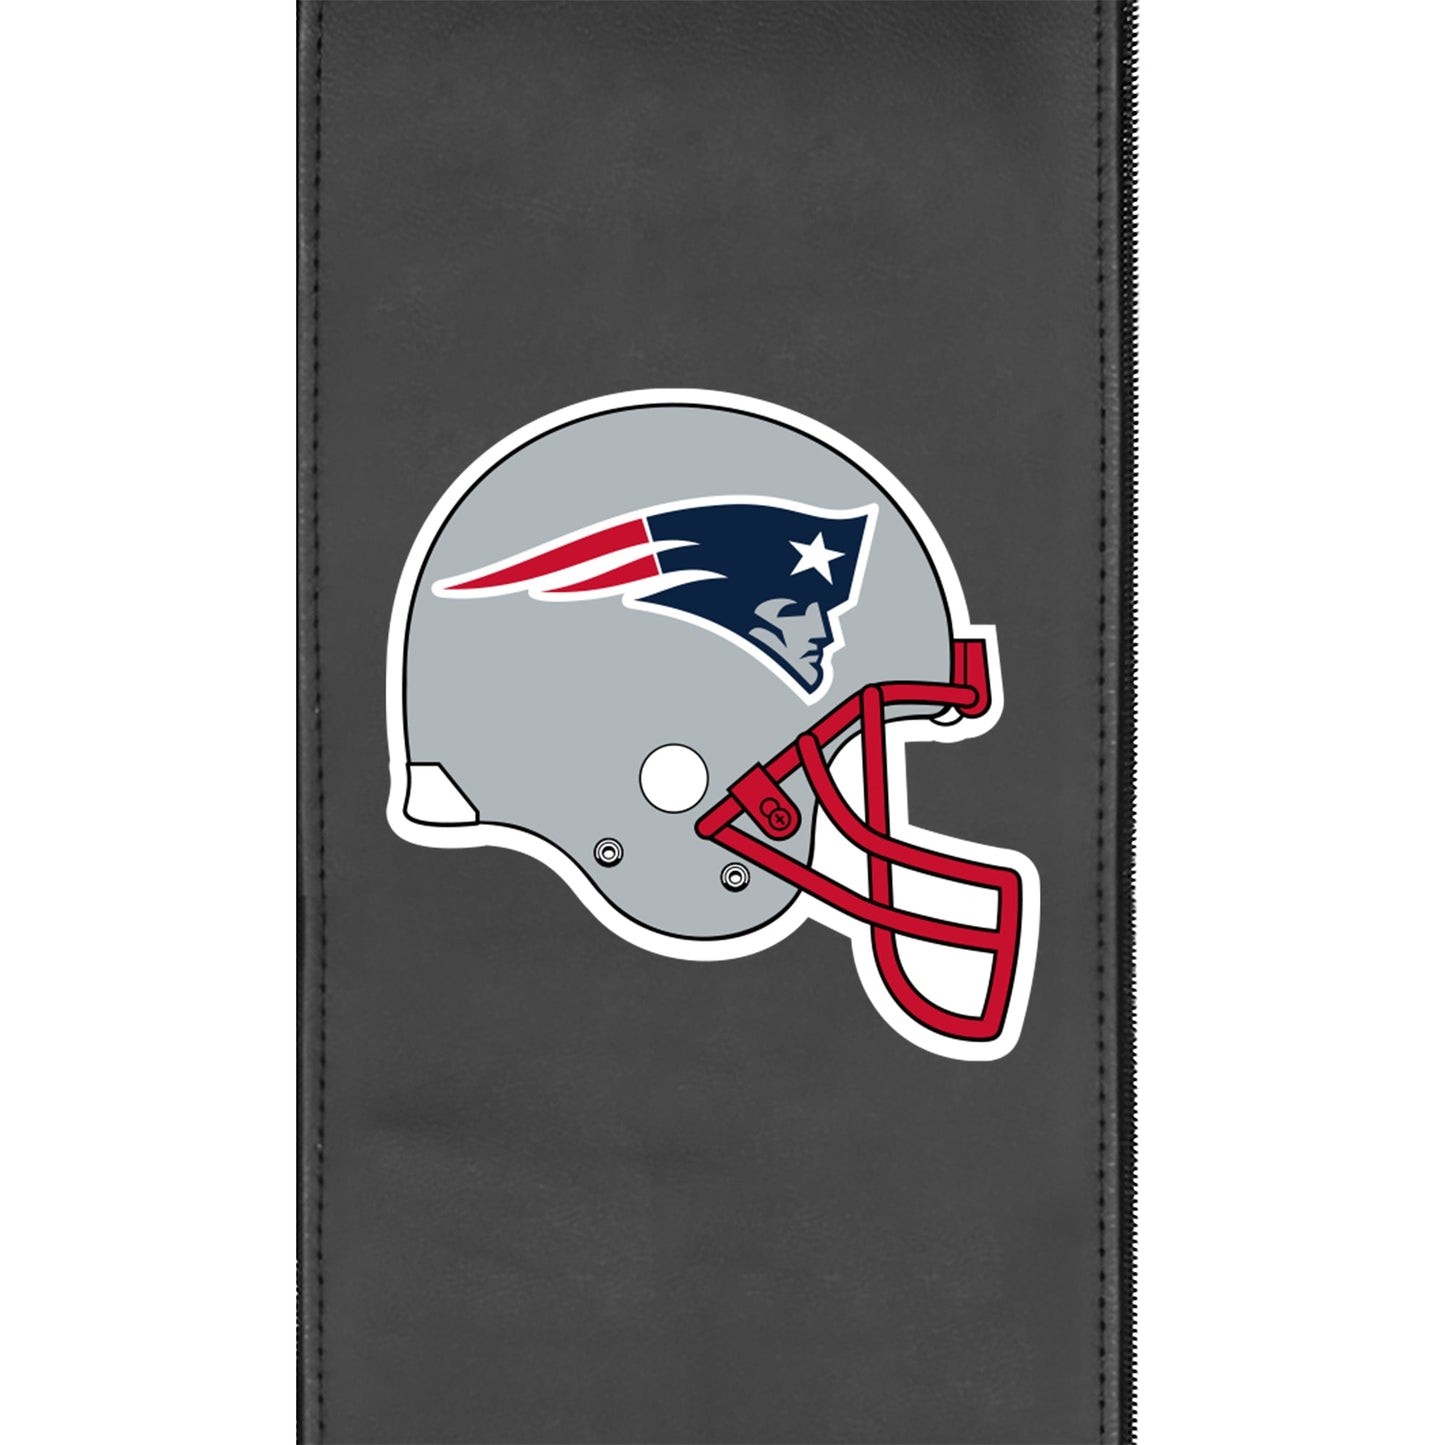 Silver Club Chair with  New England Patriots Helmet Logo